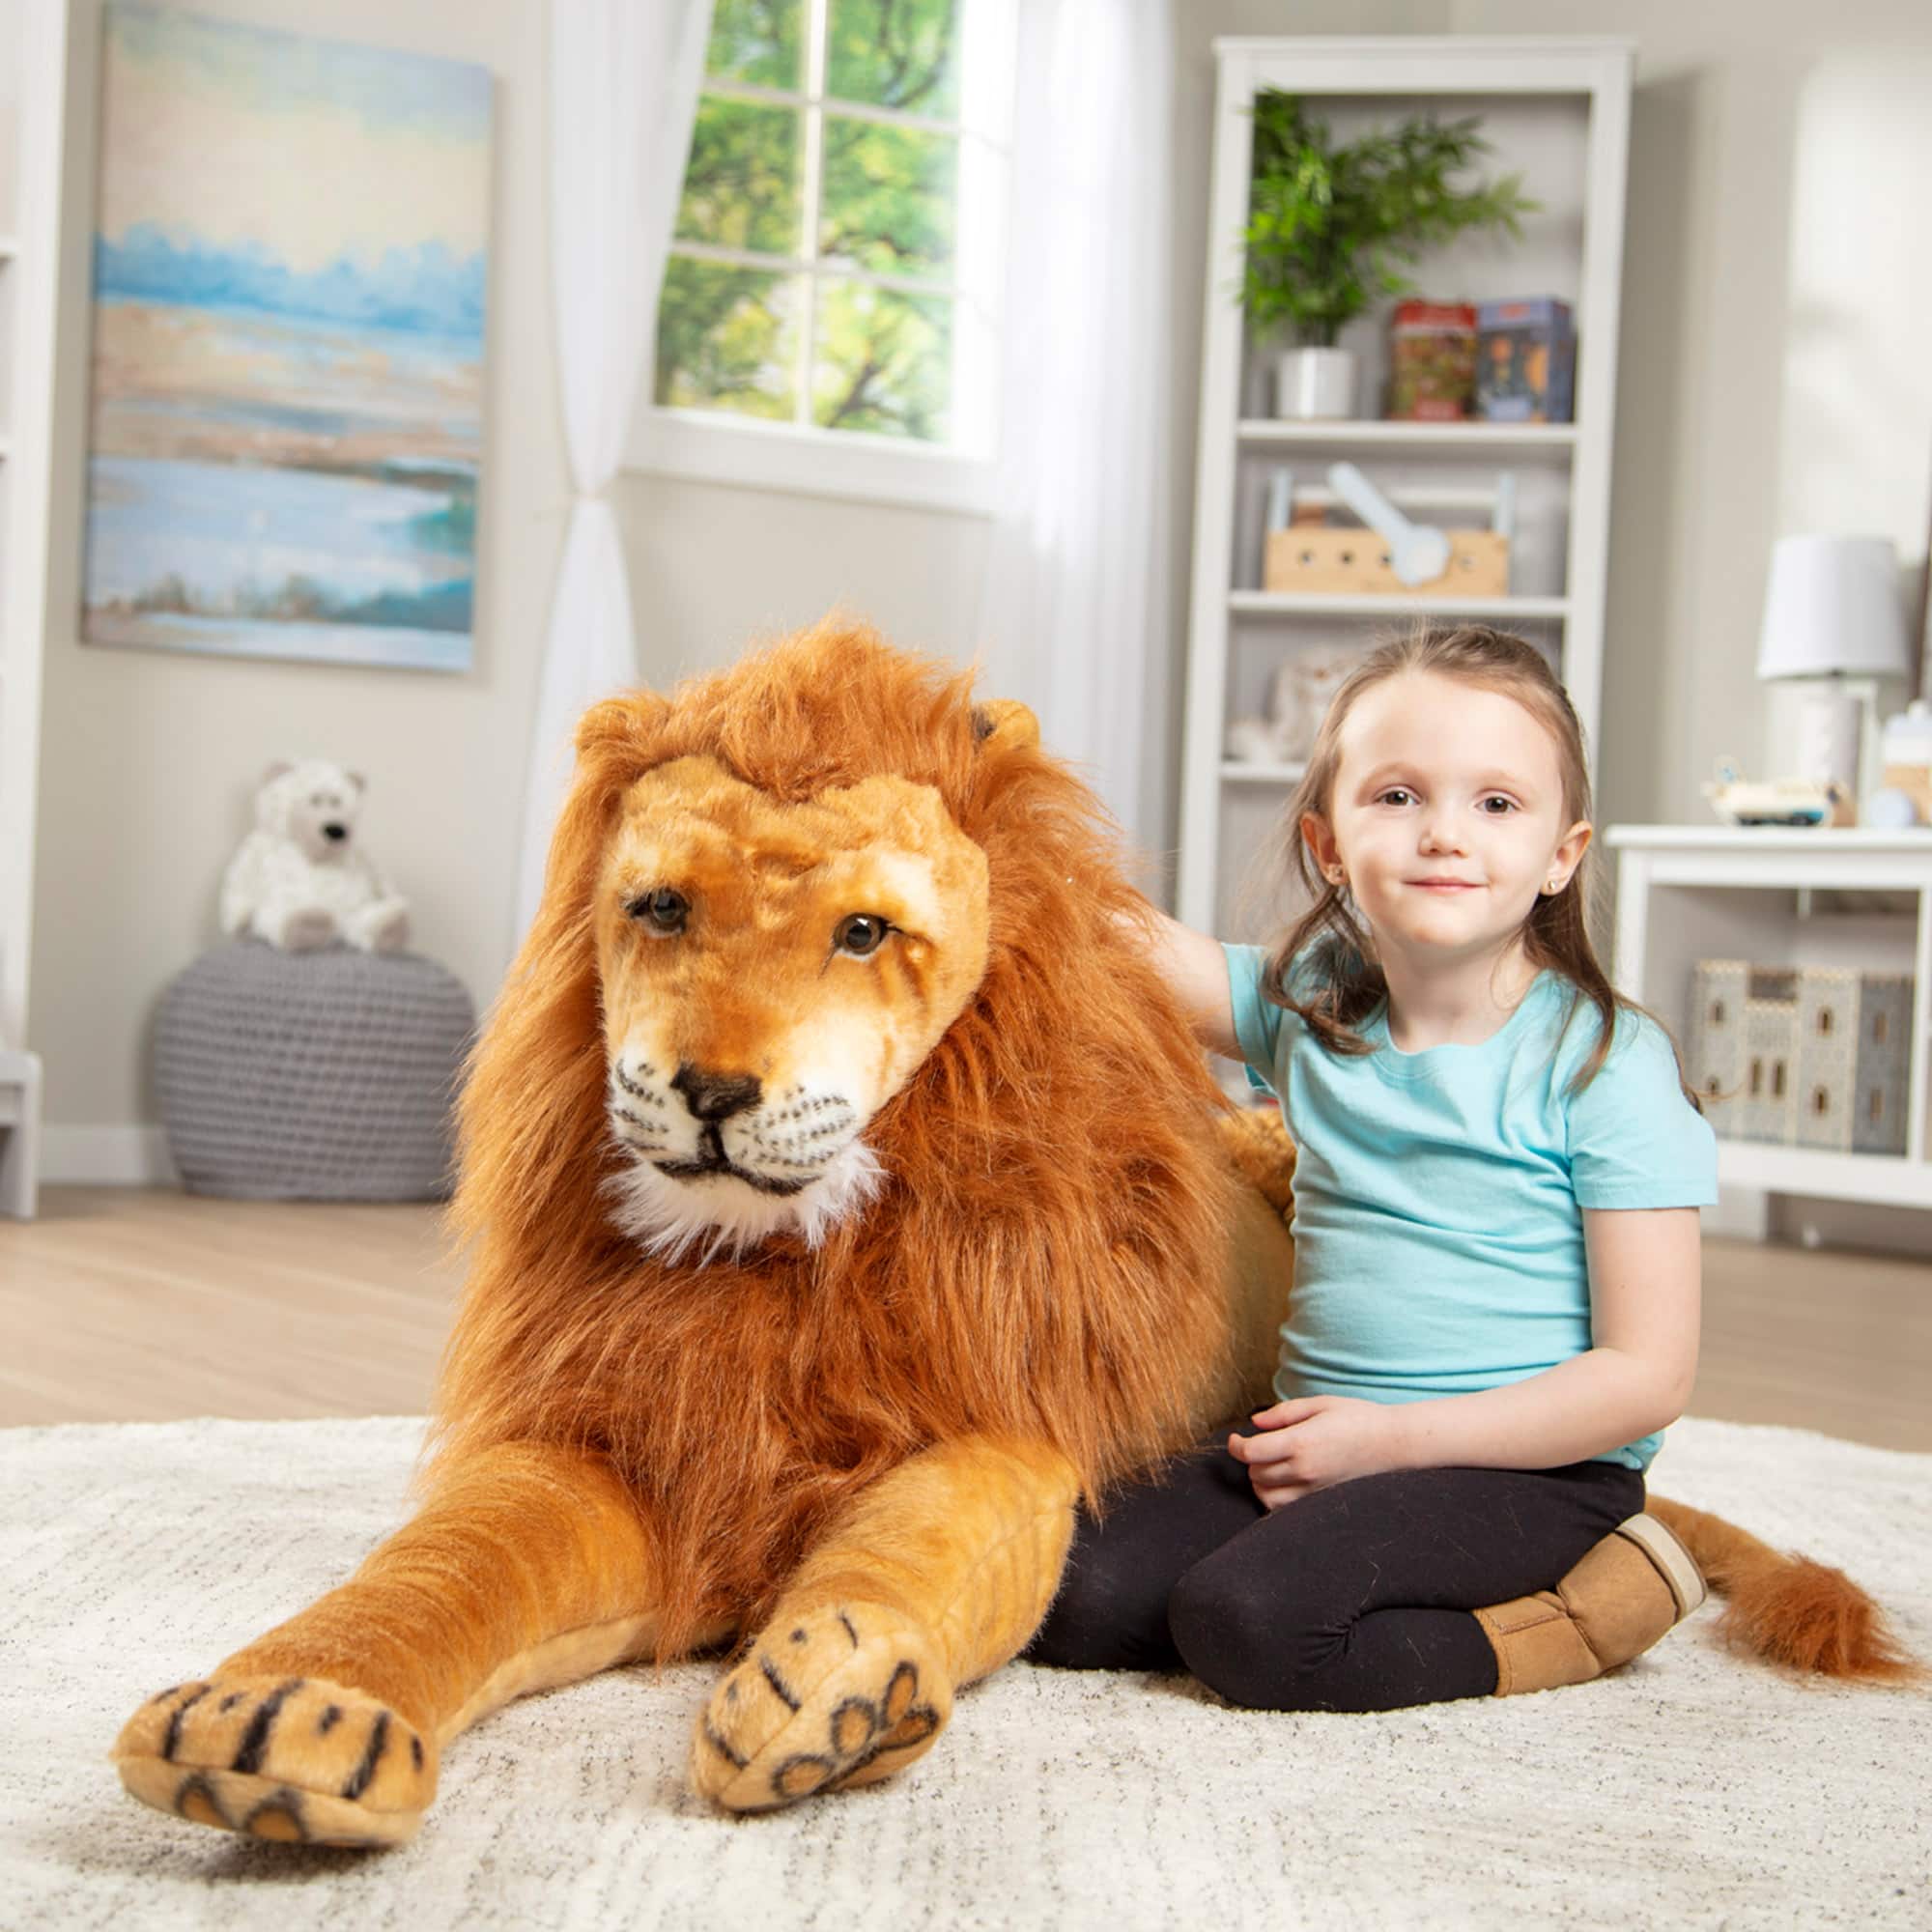 Melissa & Doug 2102 Huggable Plush Stuffed Lion for sale online 